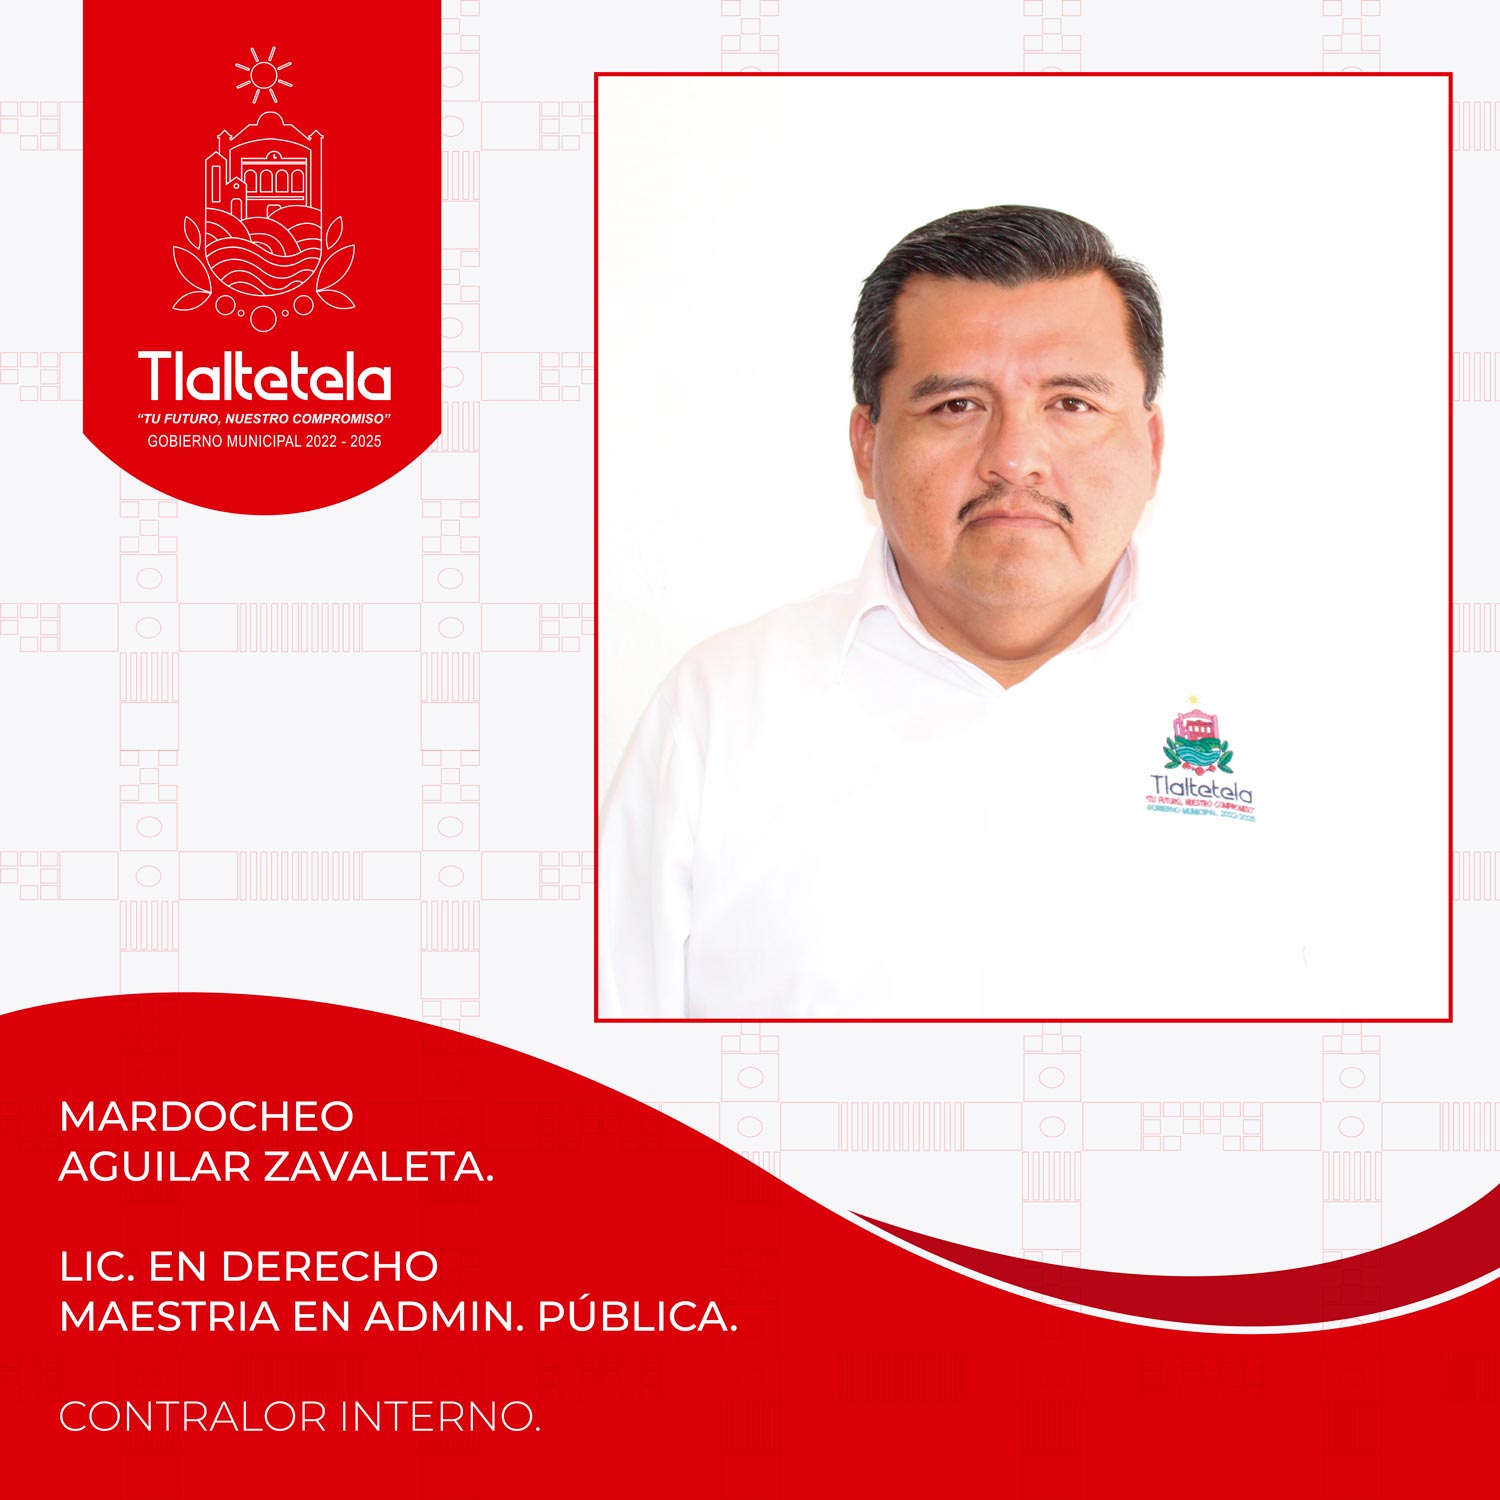 Mardocheo Aguilar Zavaleta